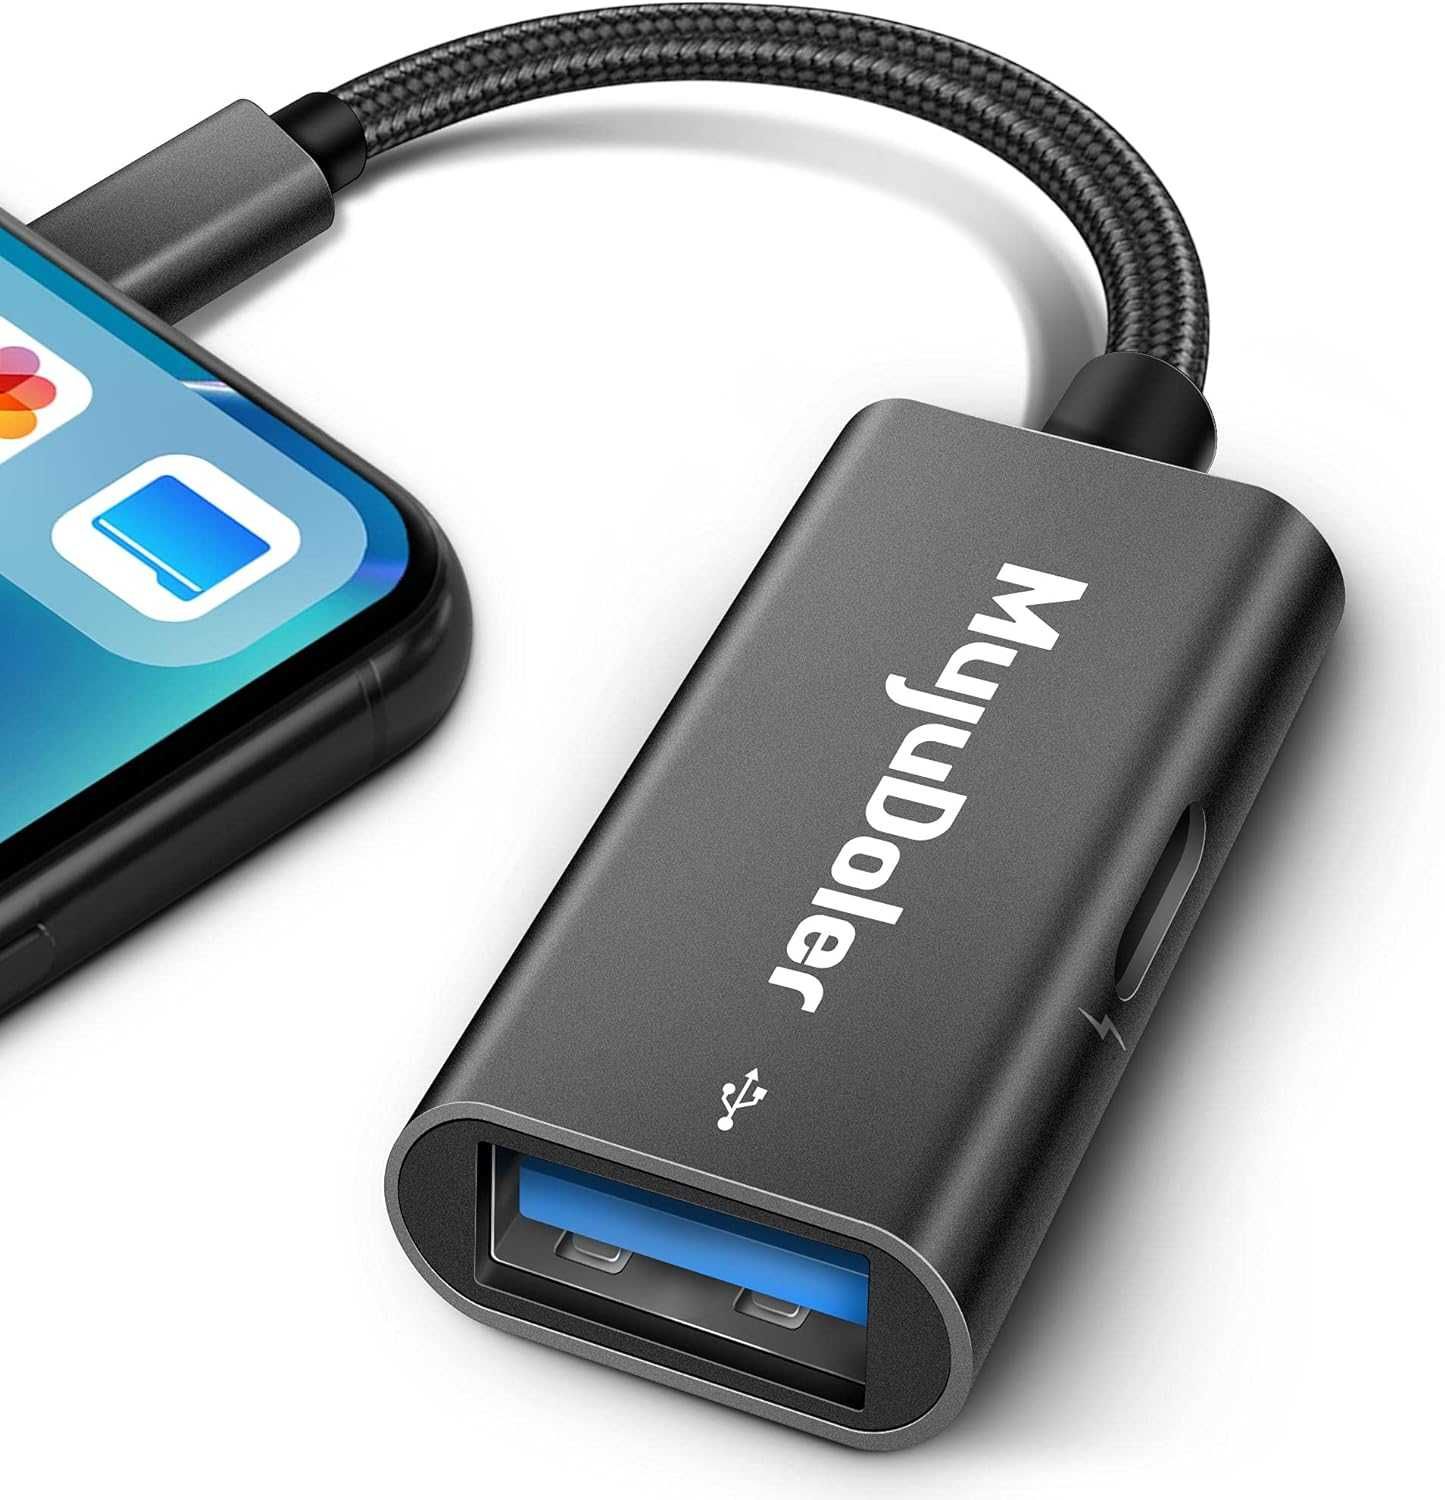 MujuDoler USB Adapter do iPhone, iPad, Apple